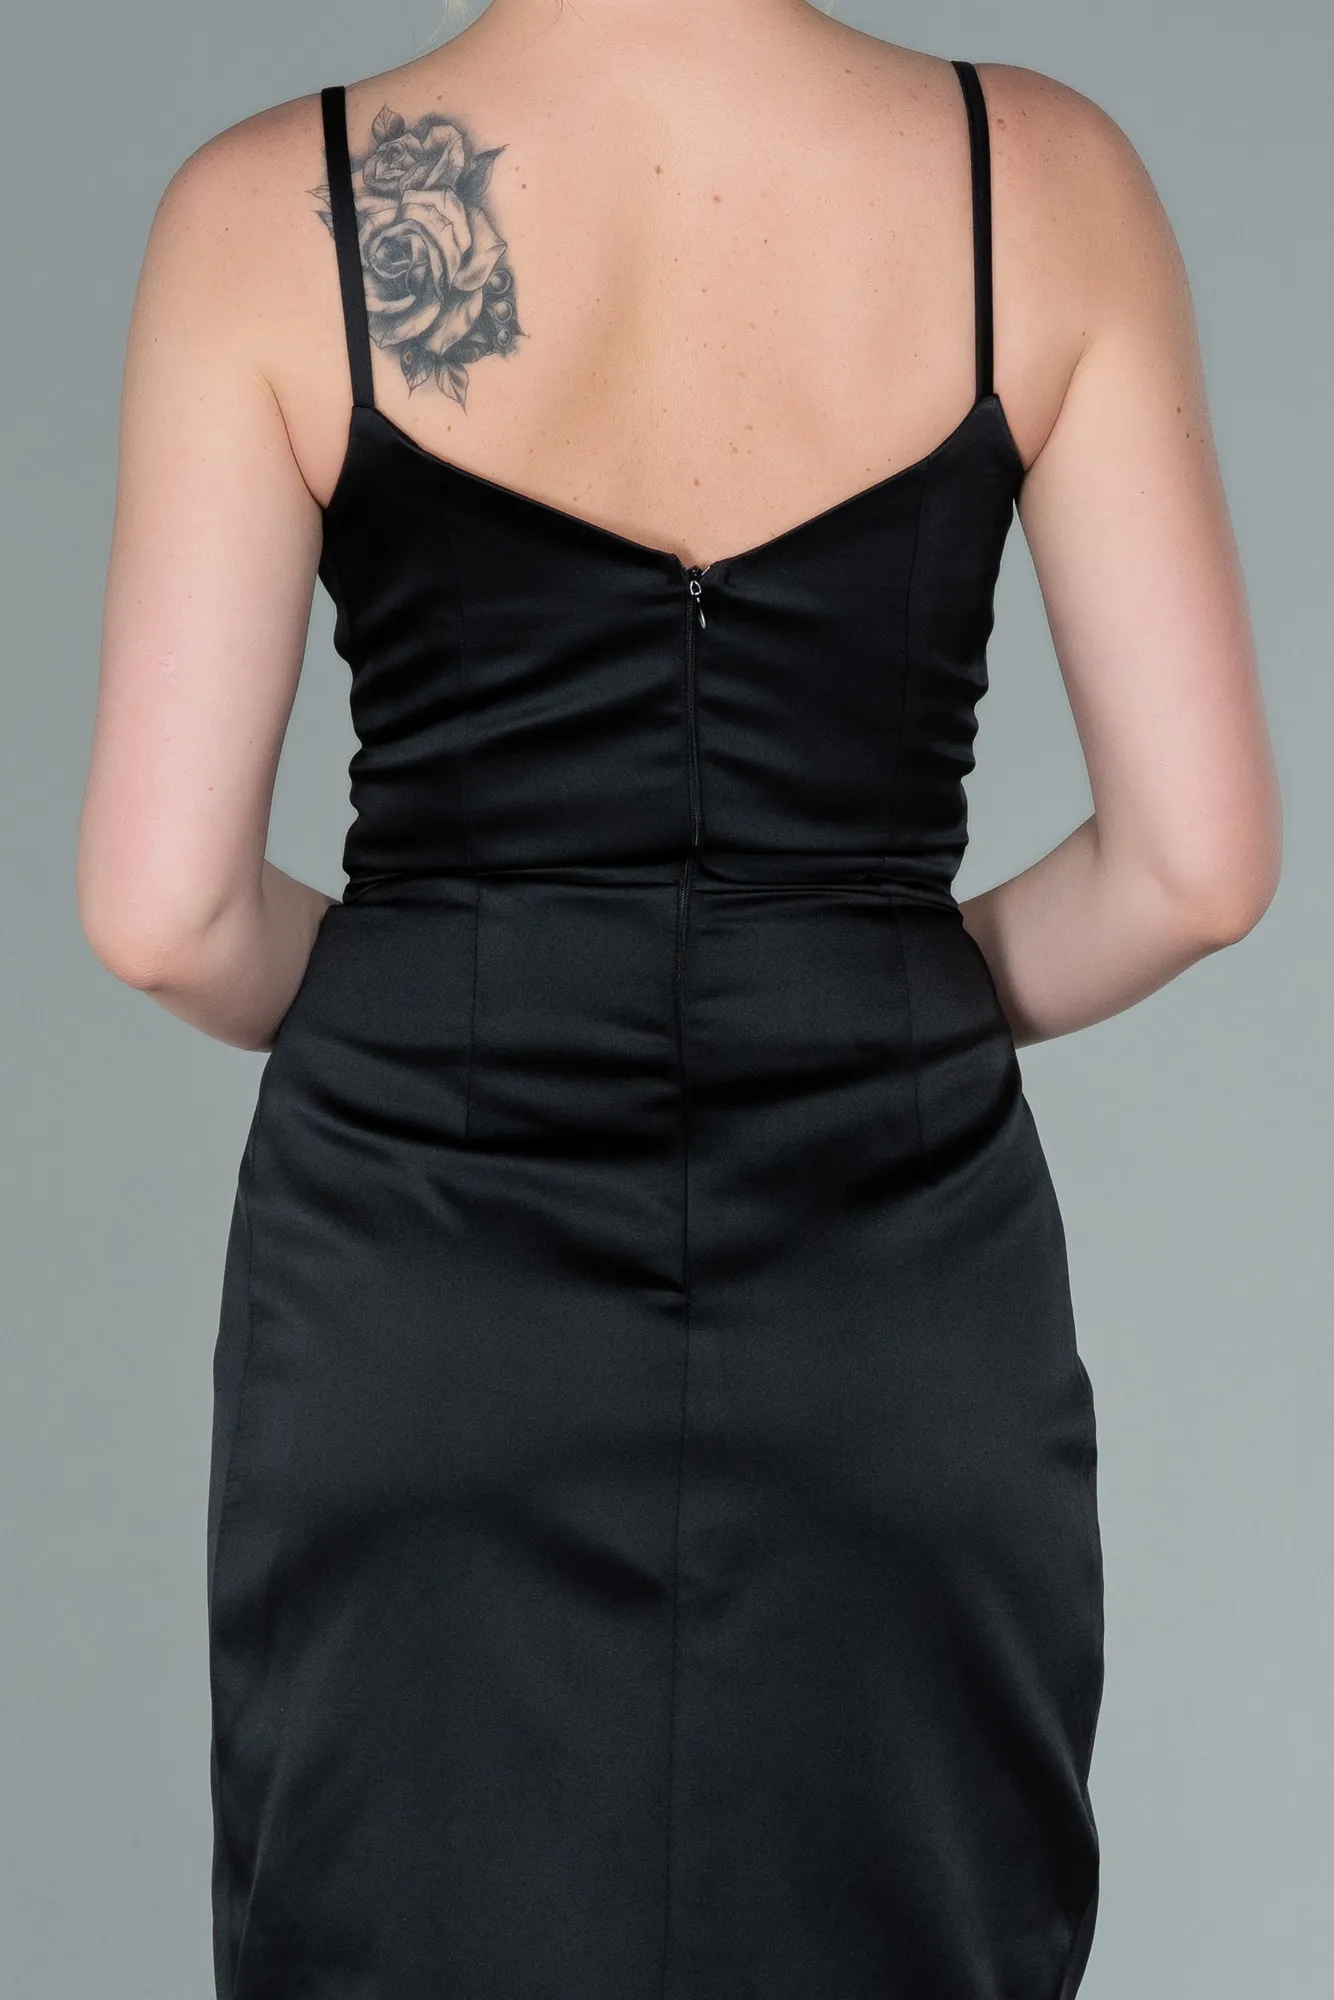 Black-Short Satin Invitation Dress ABK1081